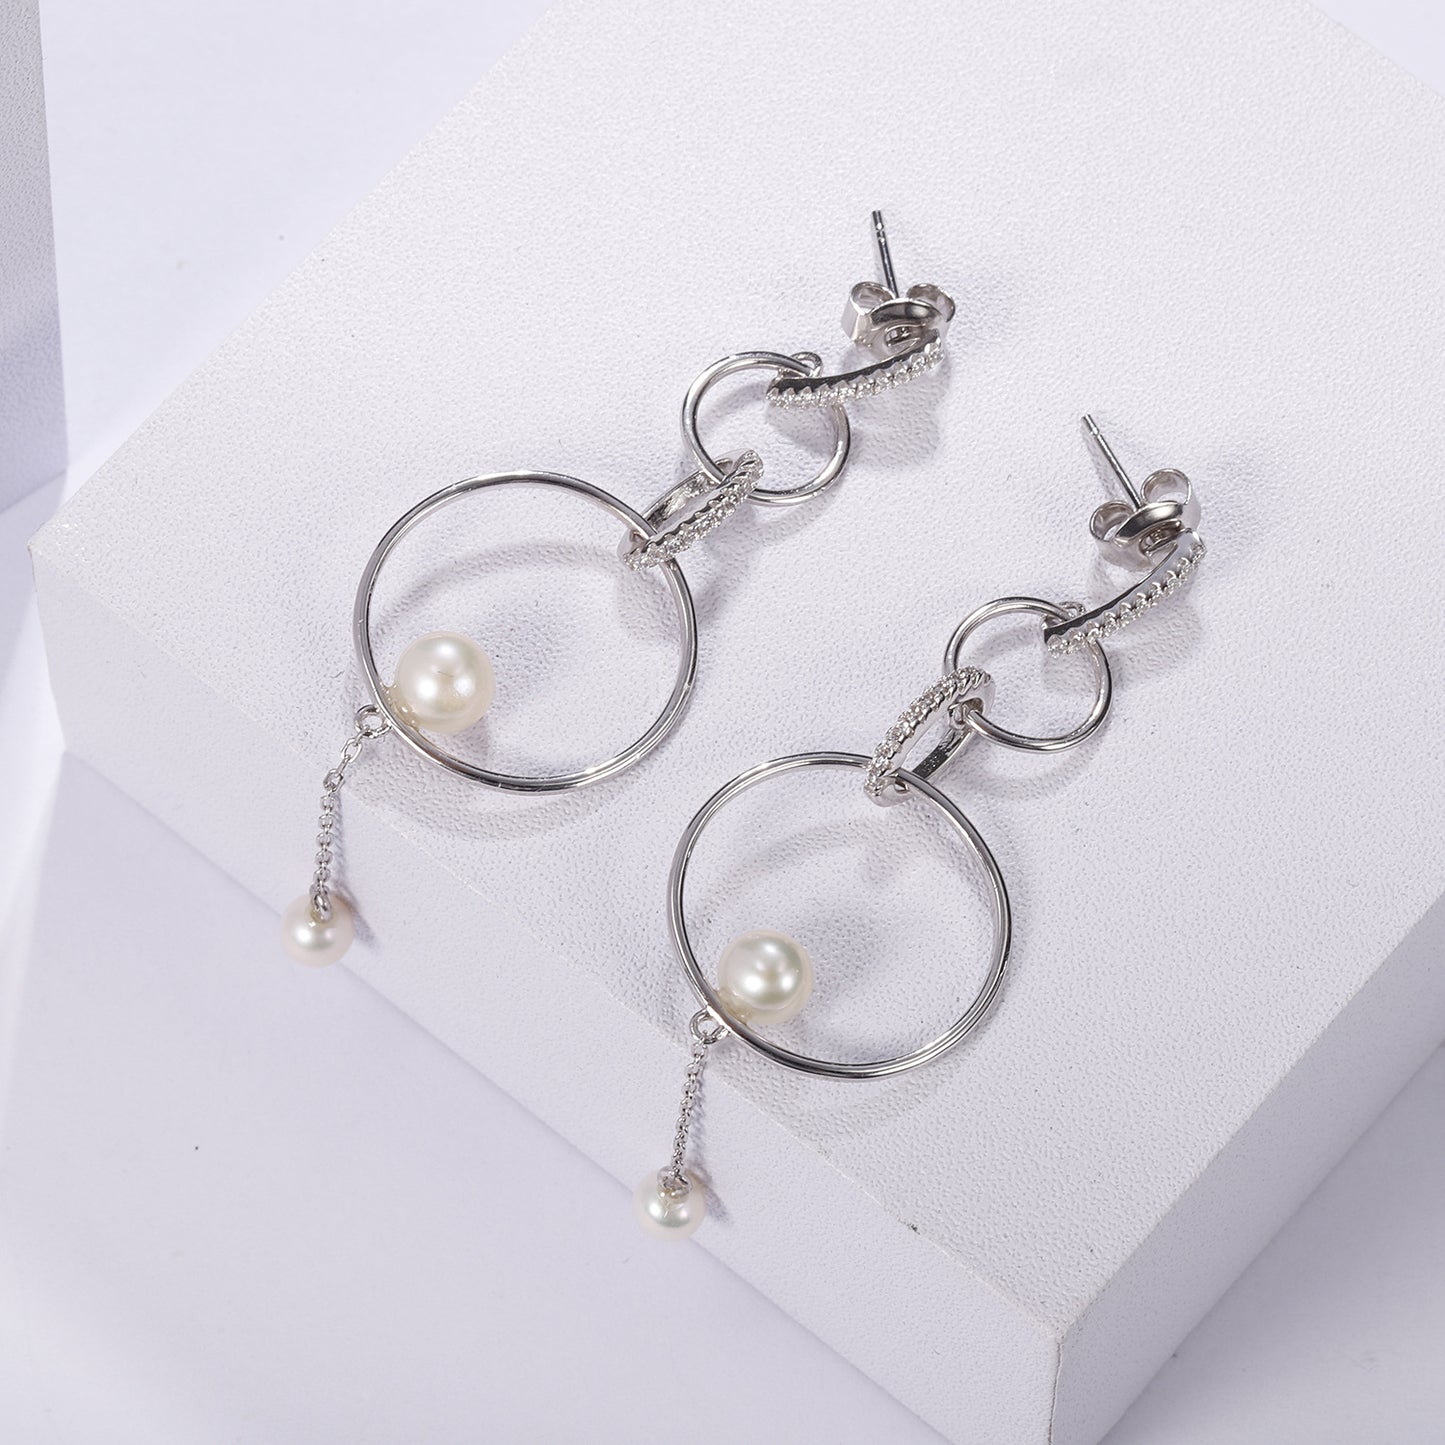 Interlocking Design 925 silver Natural Freshwater Pearl Drop Earrings for Women